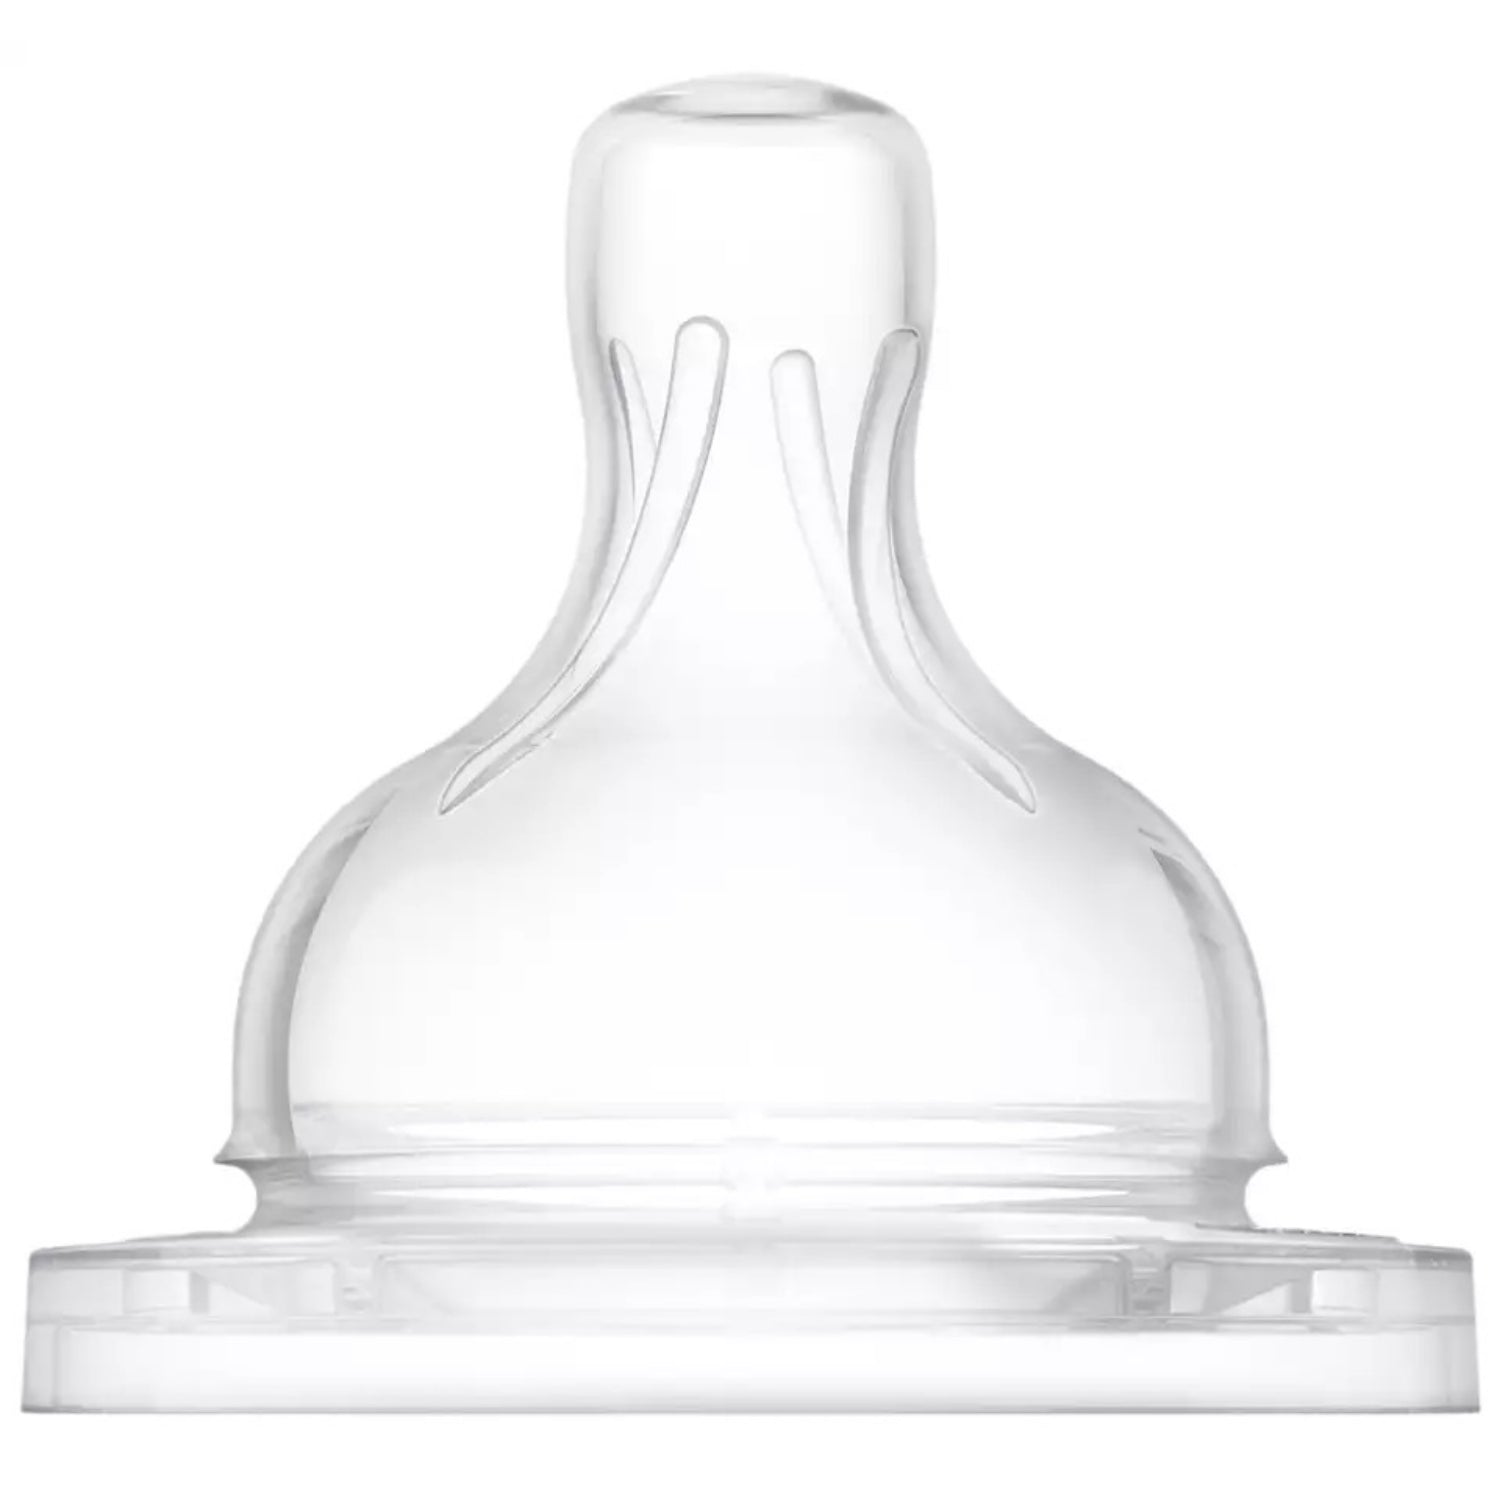 Philips Avent Anti-colic Baby Bottle Flow 3 Nipple, 2pk, SCY763/02 